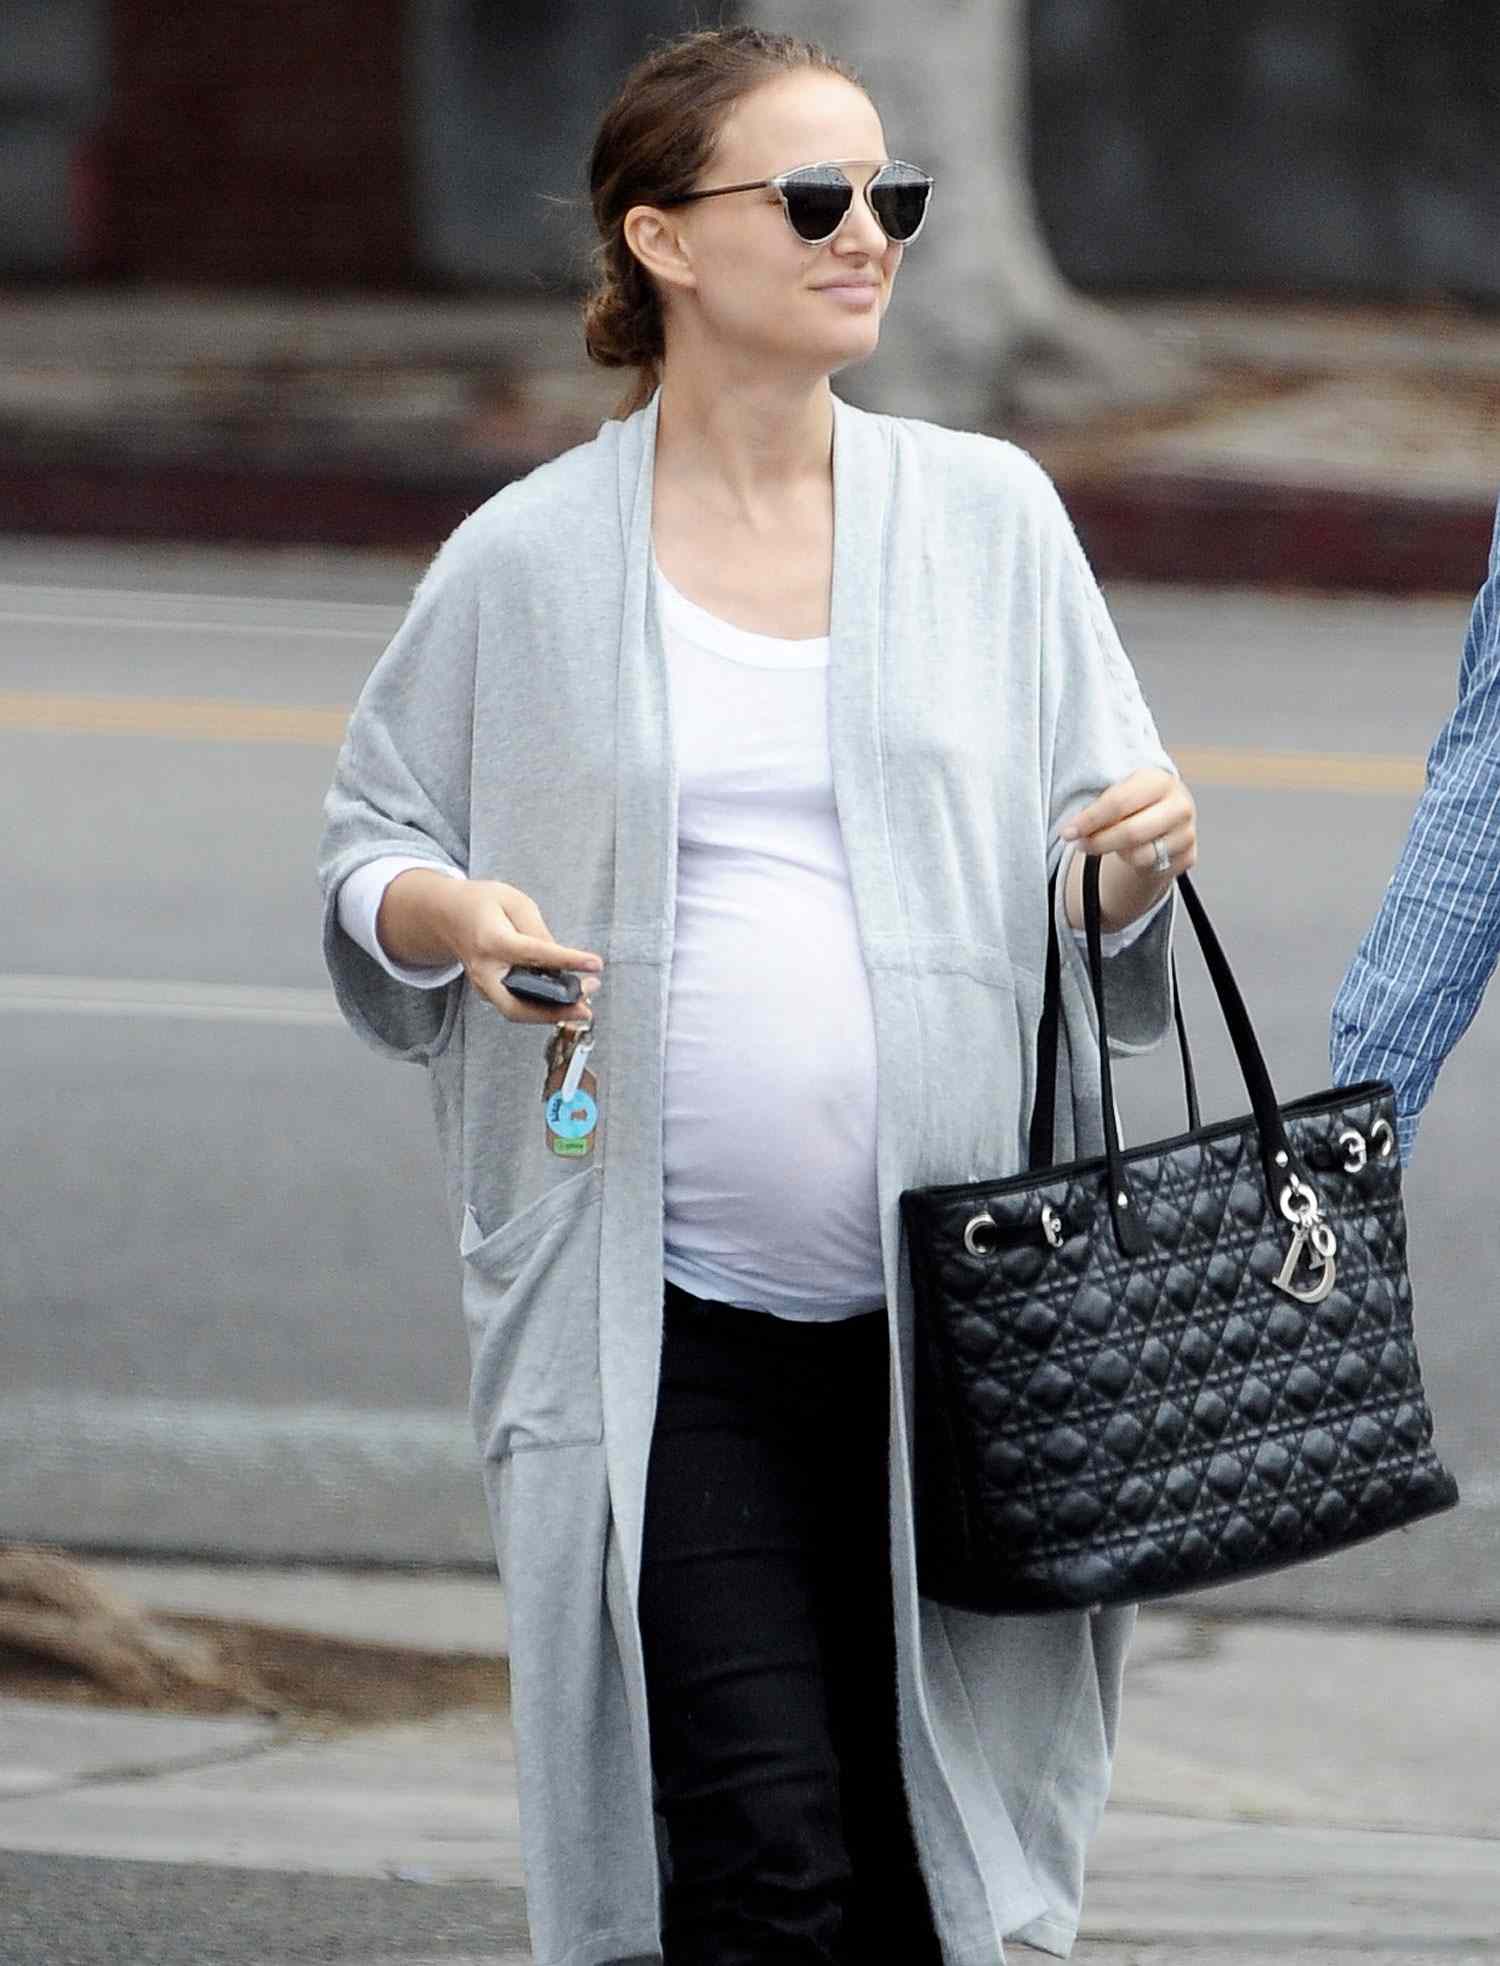 Pregnant Natalie Portman shows off her huge baby bump